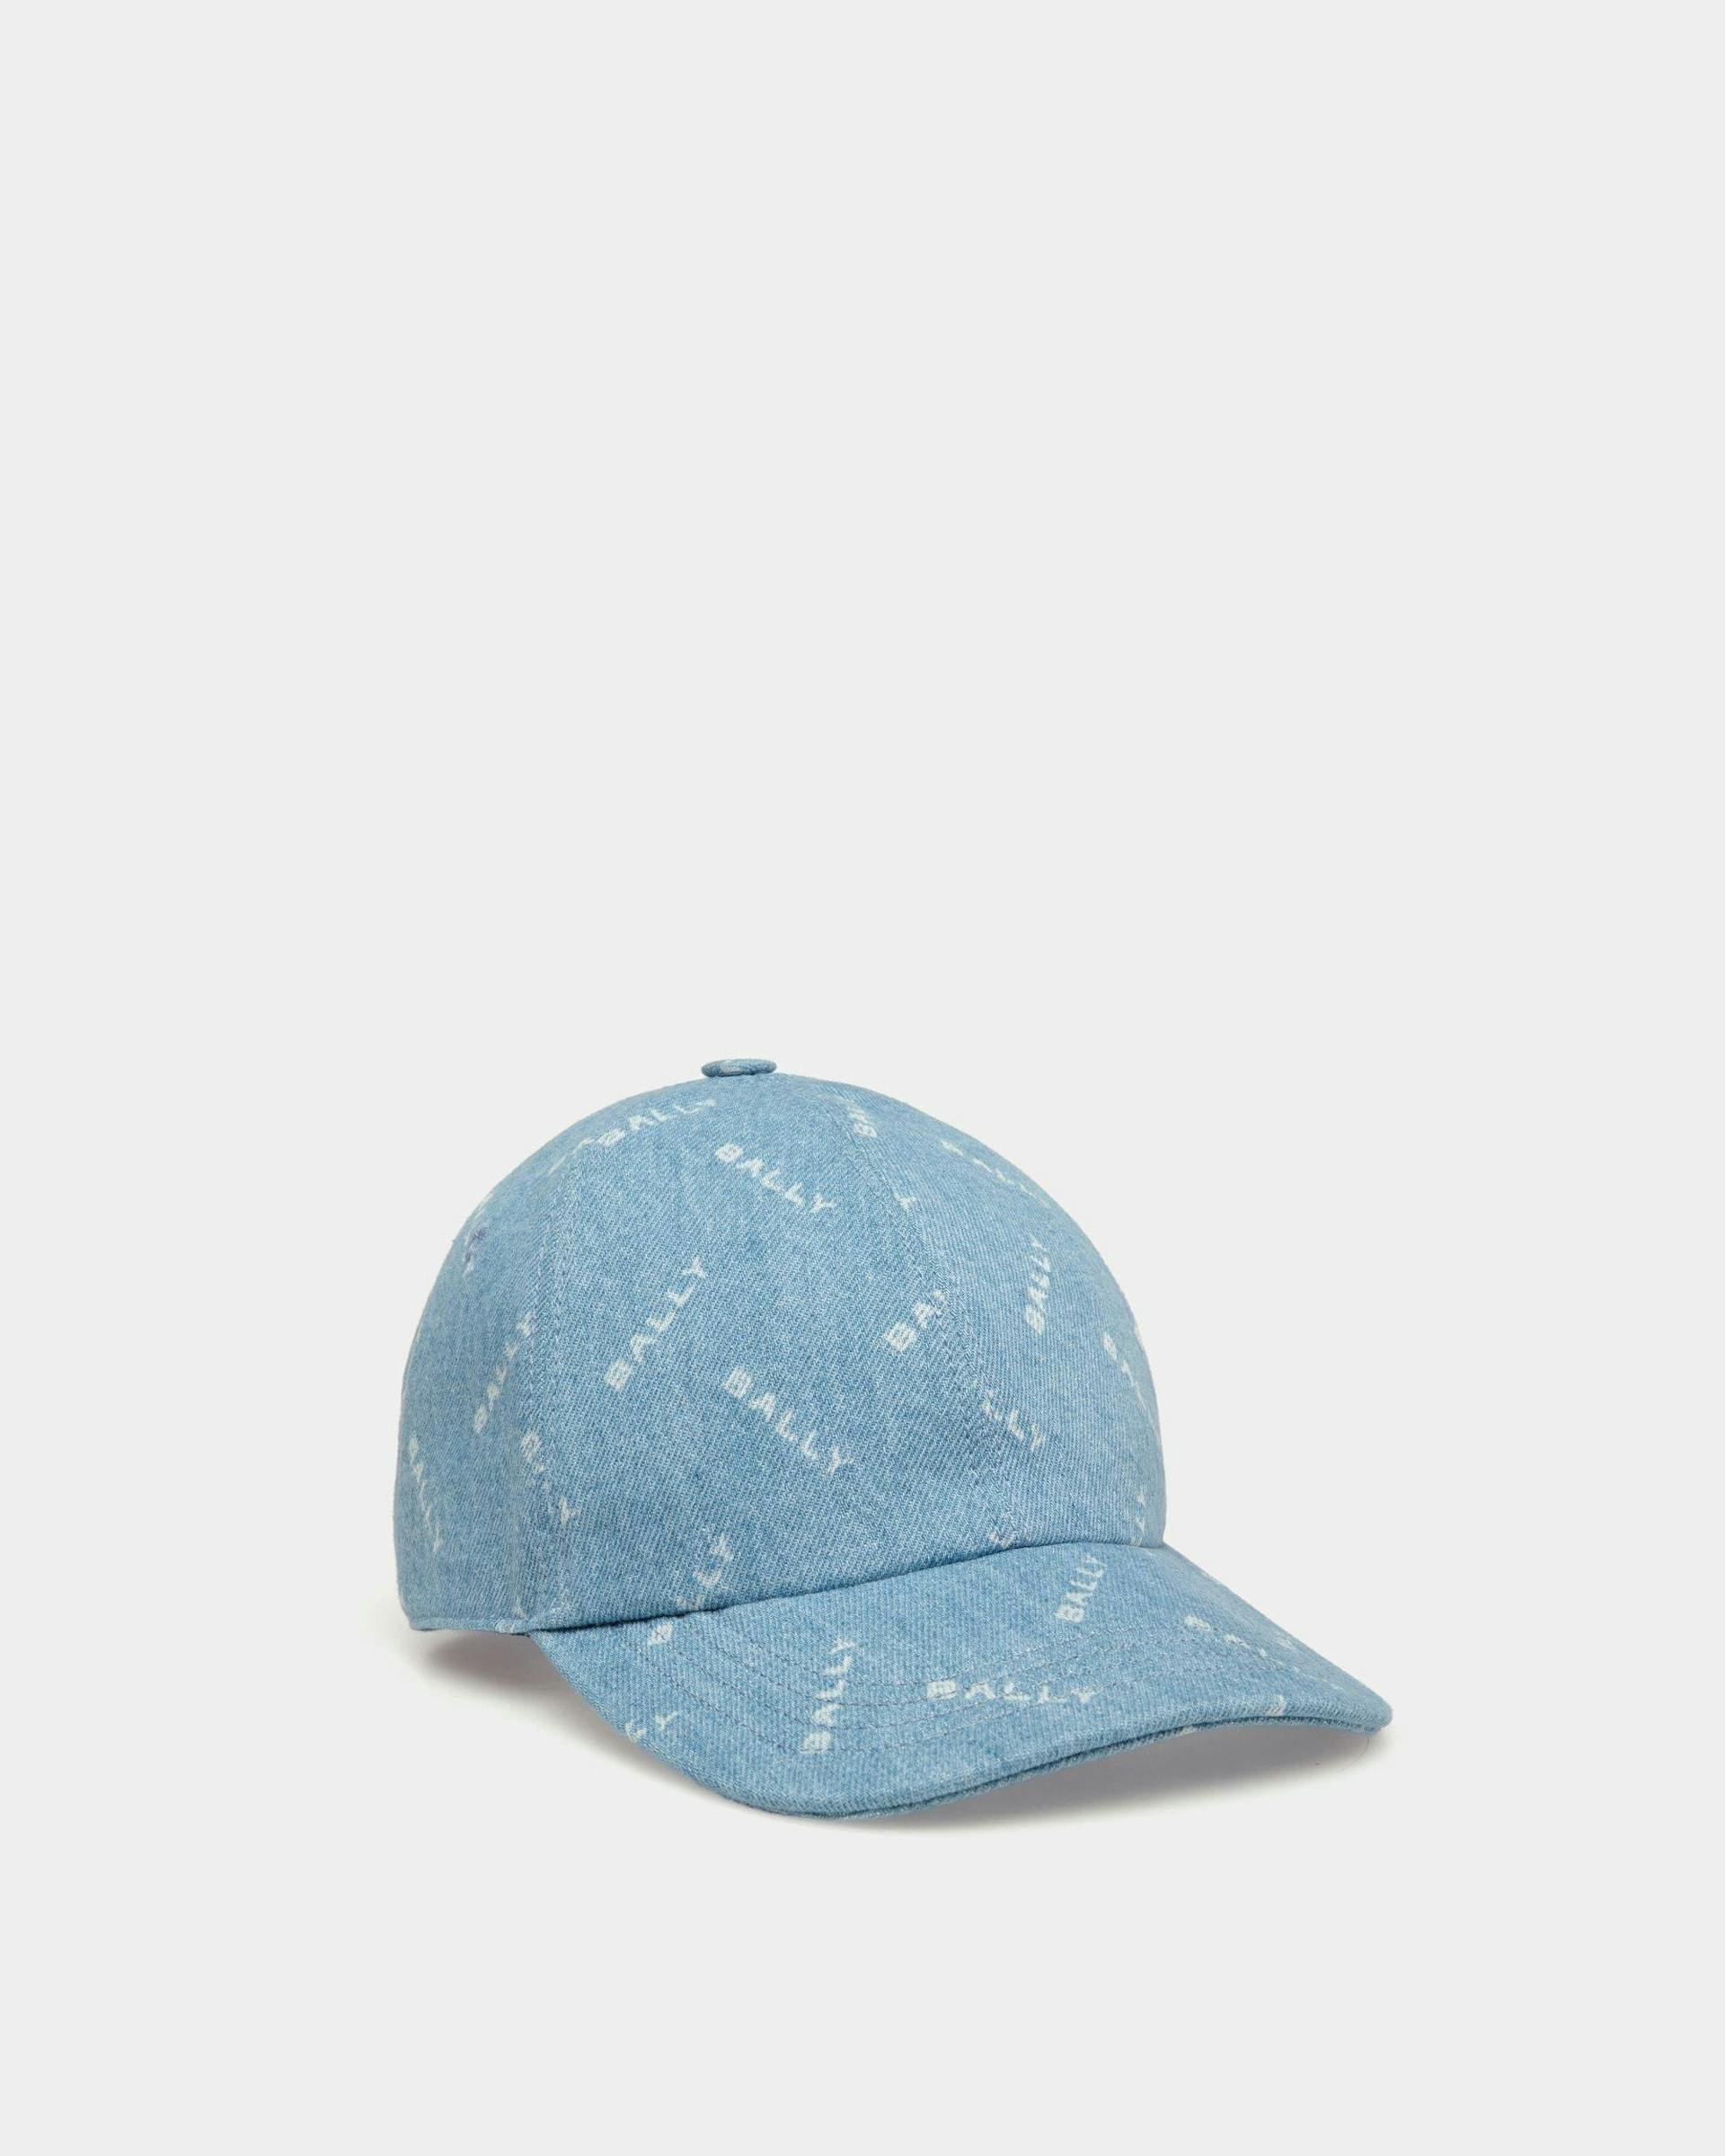 Men's Baseball Hat In Light Blue Cotton | Bally | Still Life Front